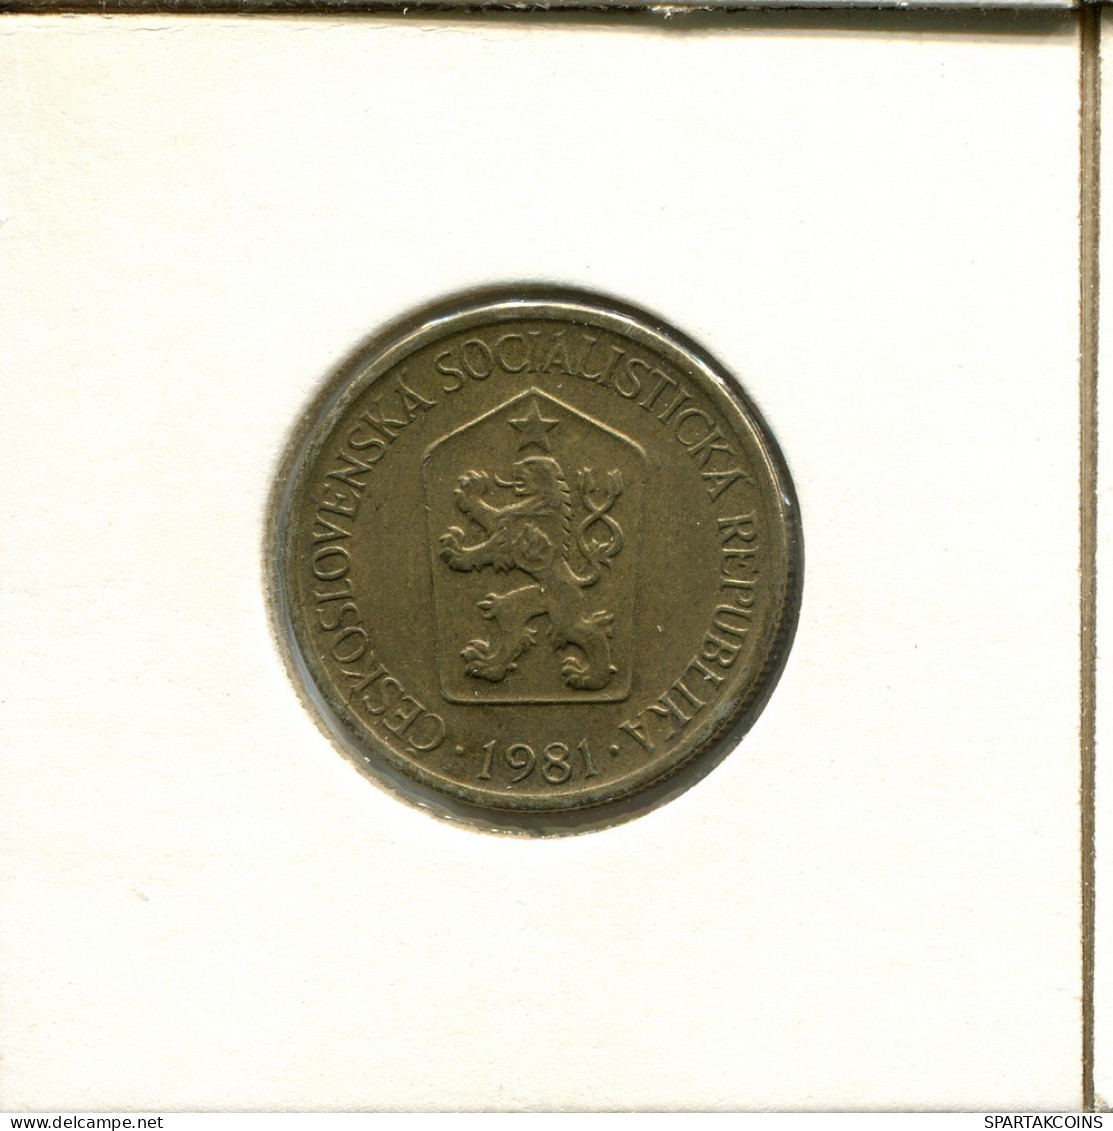 1 KORUNA 1981 CZECHOSLOVAKIA Coin #AS969.U.A - Czechoslovakia